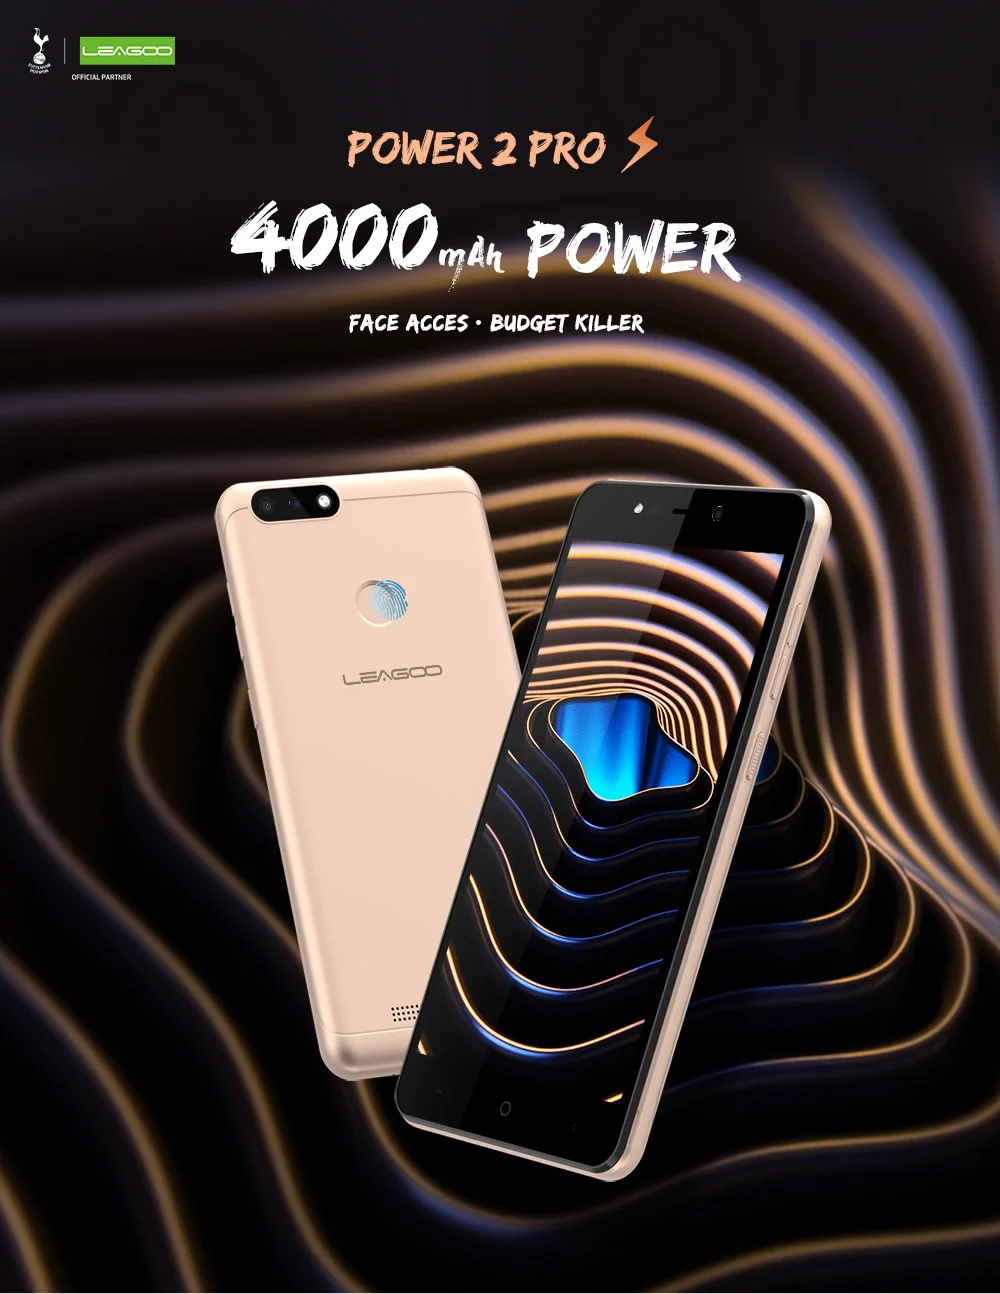 LEAGOO POWER 2 PRO 4000mAh Face ID Fingerprint Smartphone 2GB+16GB Dual Camera Android 8.1 Quad Core 5.2' HD 4G Mobile Phone (1)